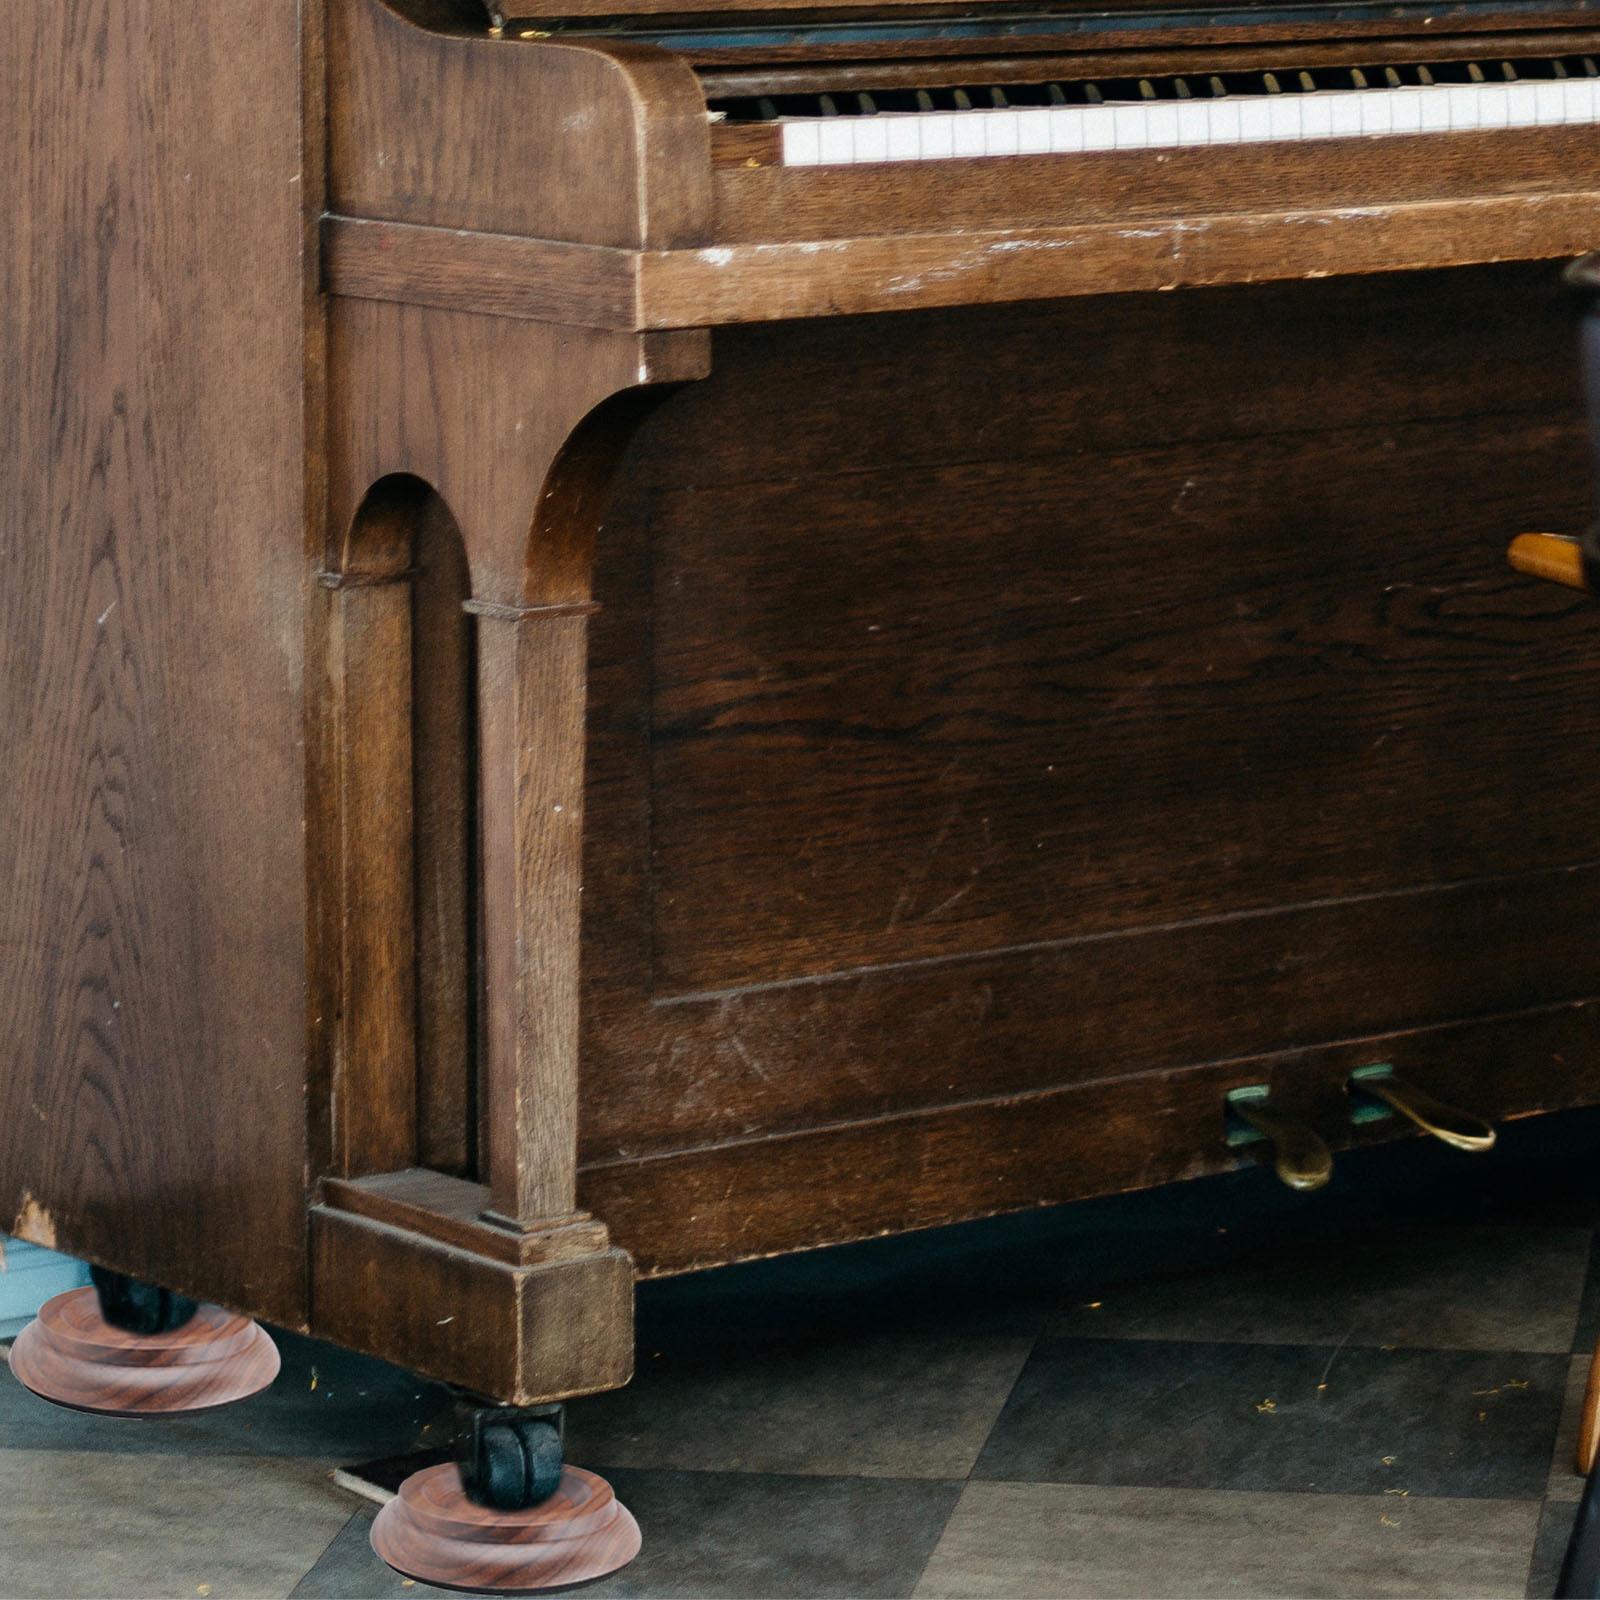 4Pcs Non Slip Piano Caster Cups Piano Foot Pads Piano Legs Foot Pad Piano Accessories